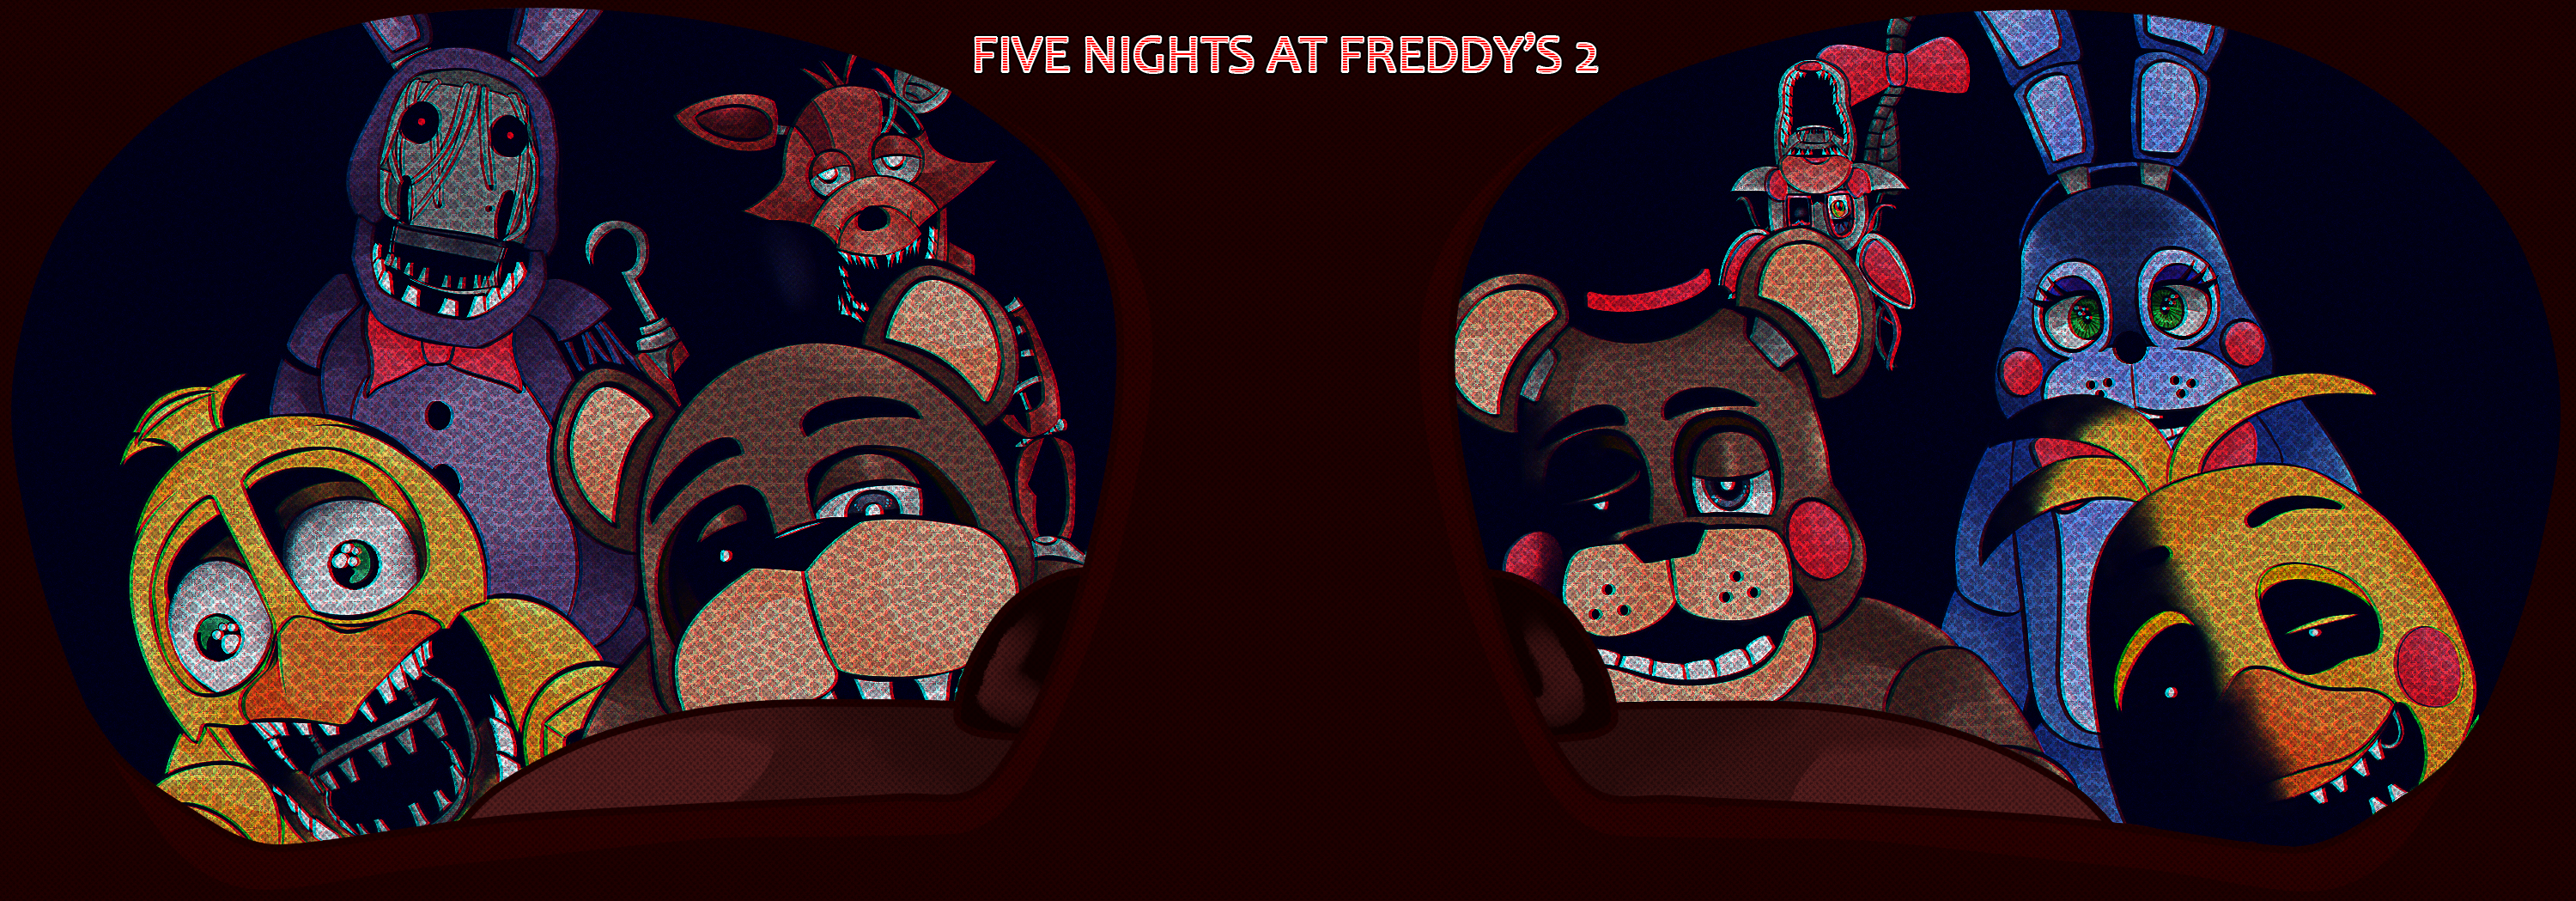 Five Nights At Freddy's 2 by Gyki on DeviantArt